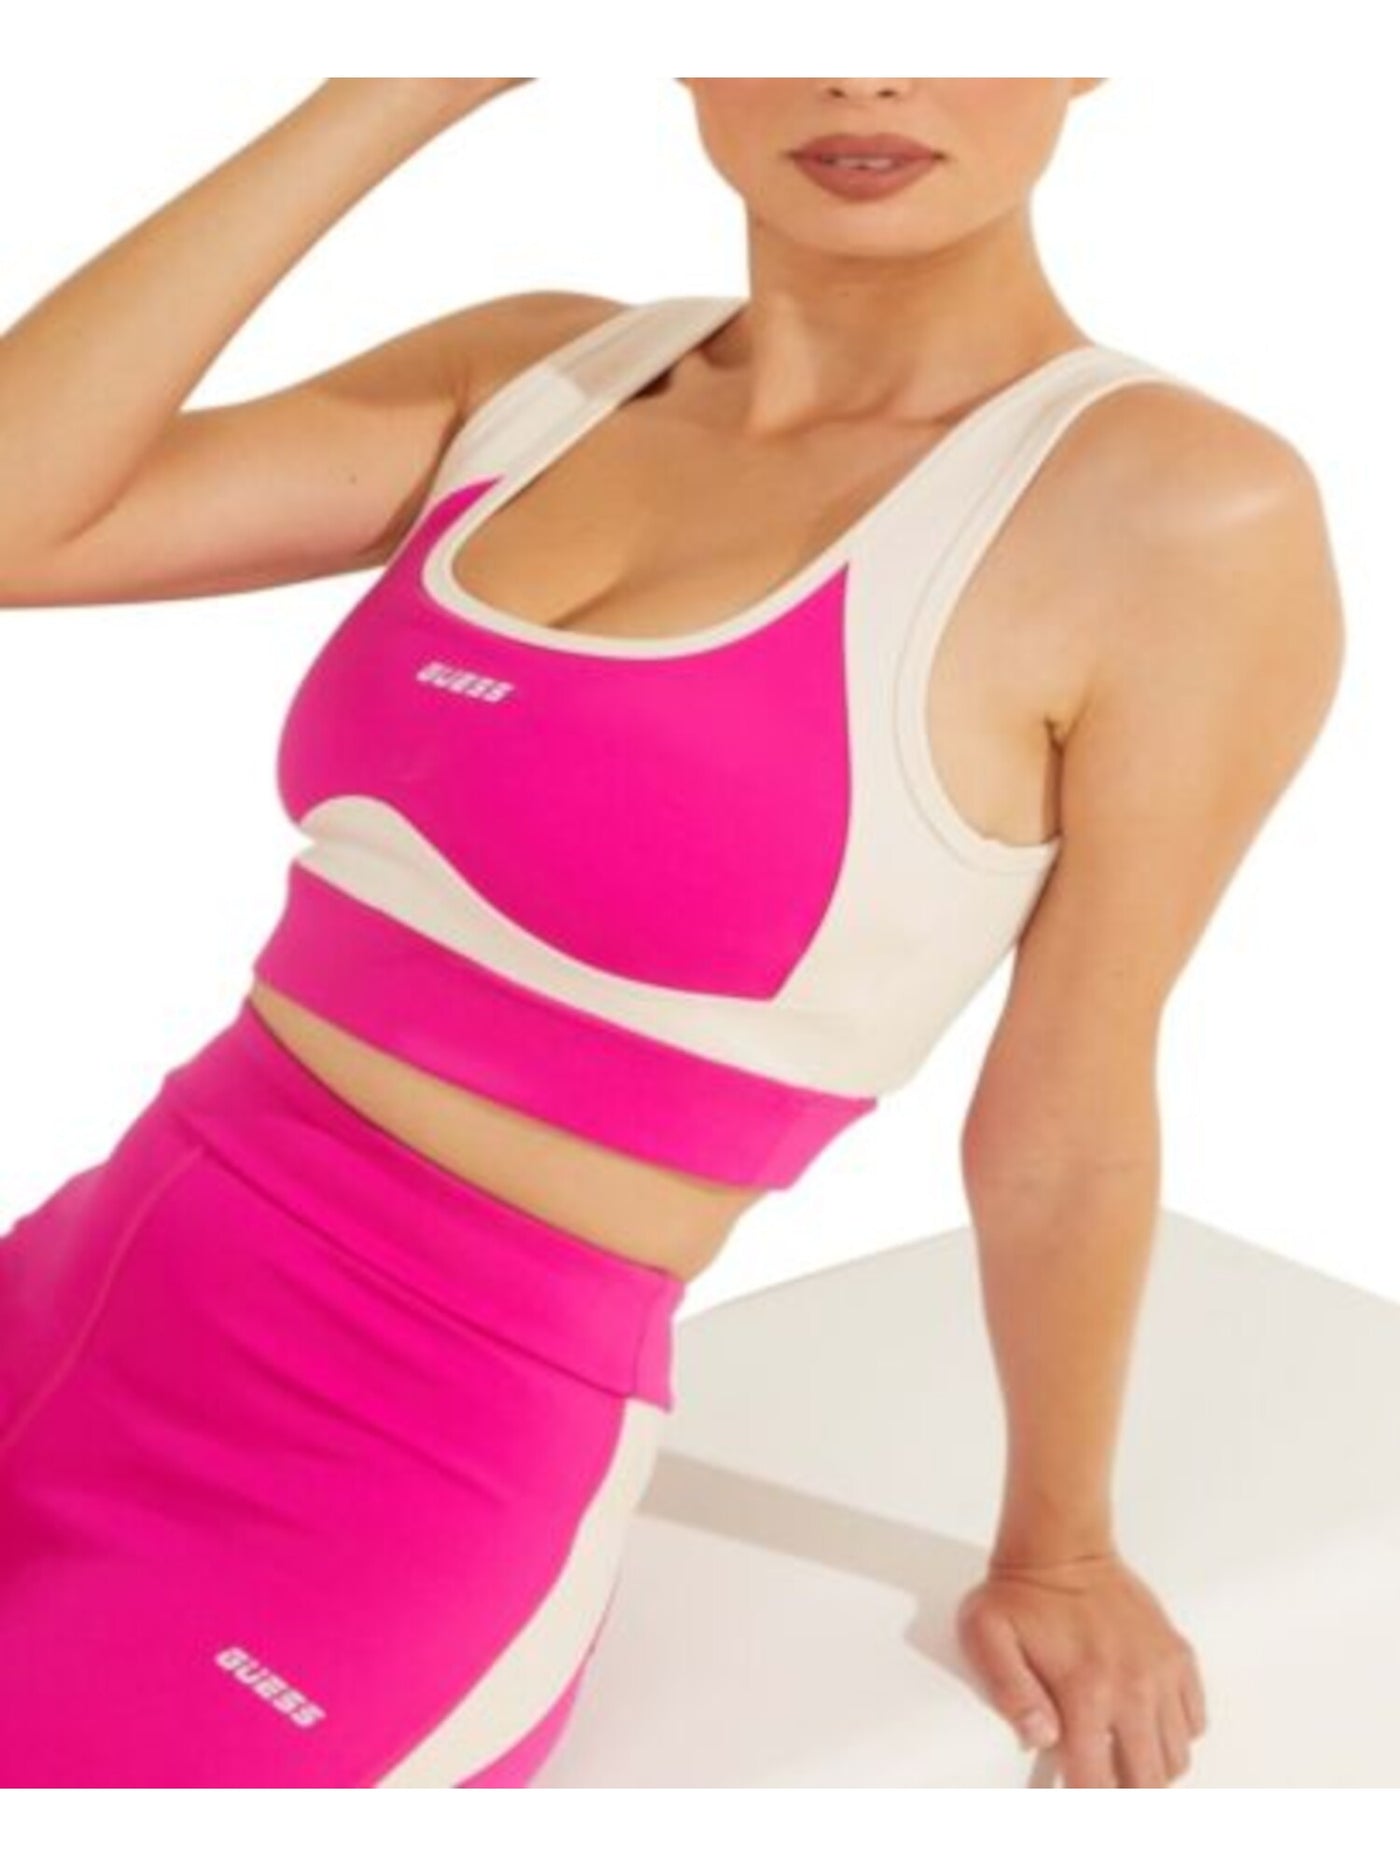 GUESS Intimates Pink Compression Cutouts at back Square neckline Sports Bra XS